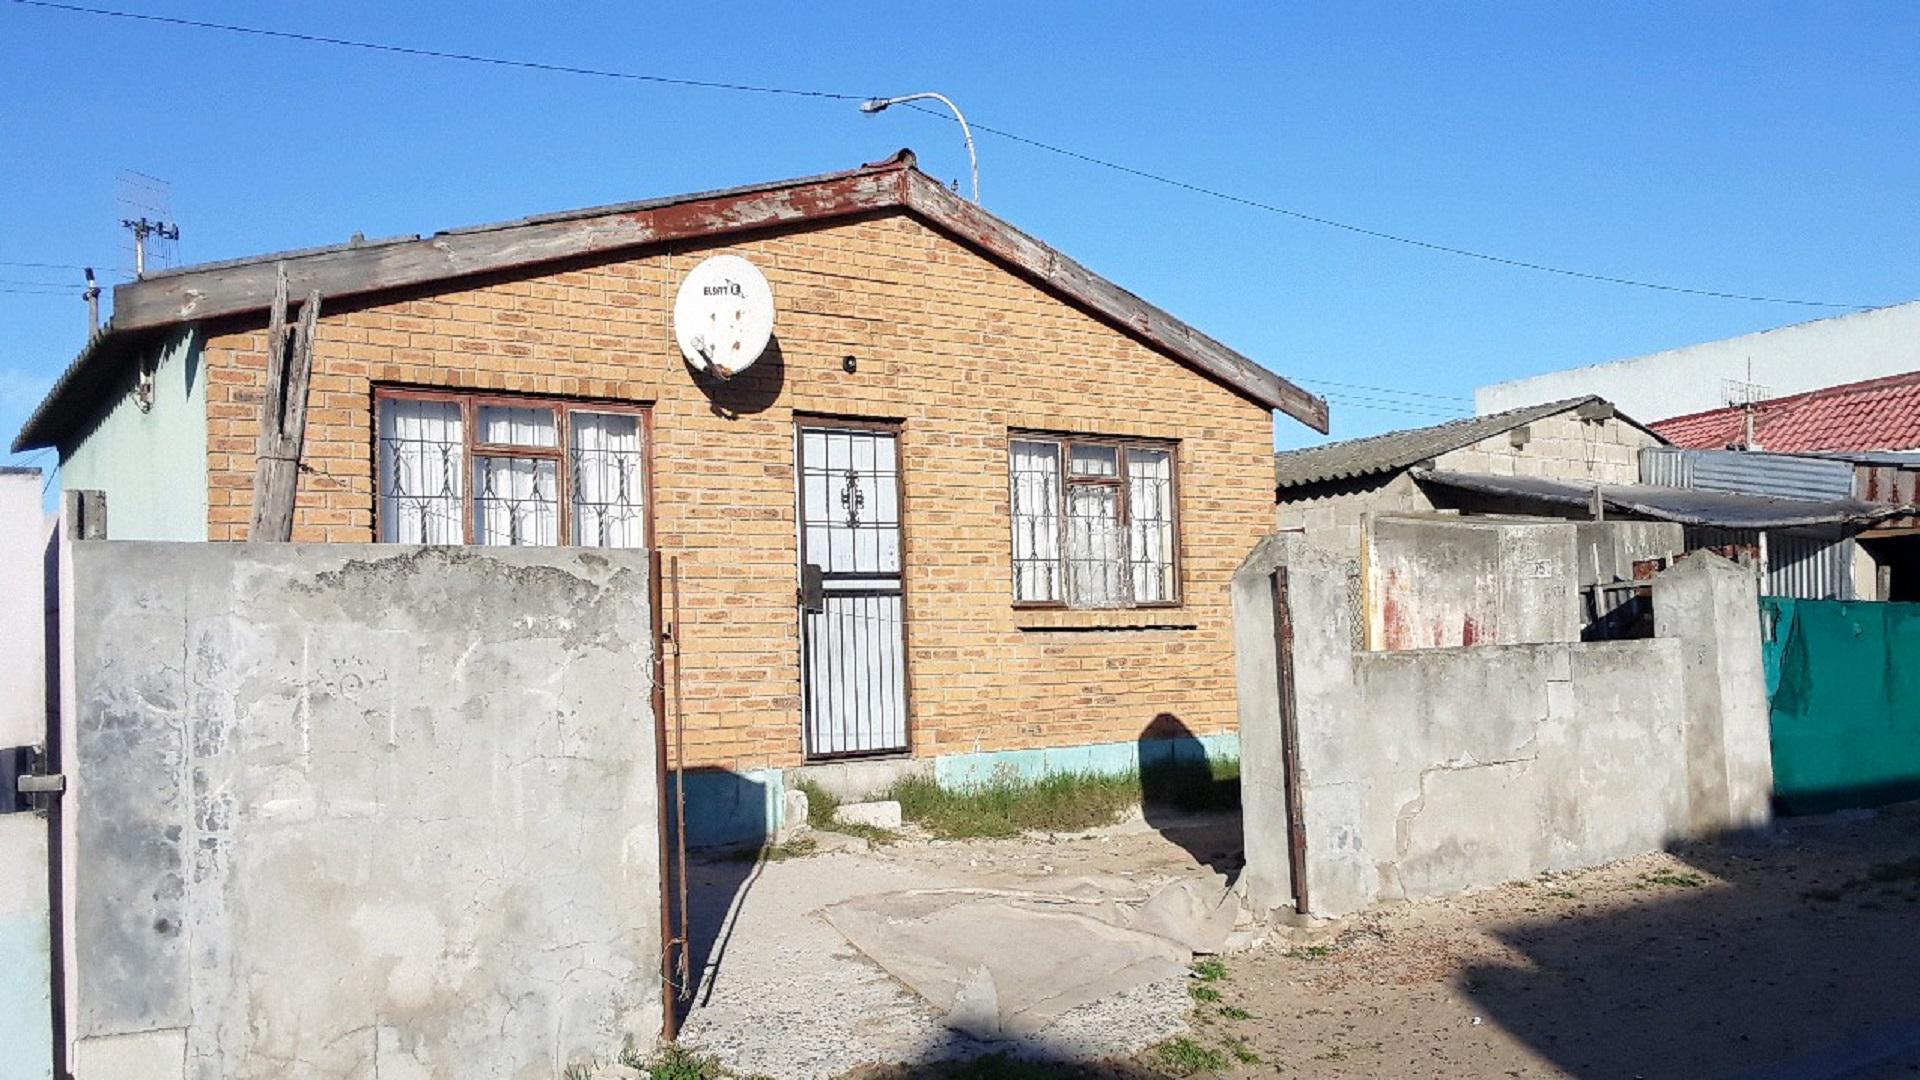 Front View of property in Khayelitsha